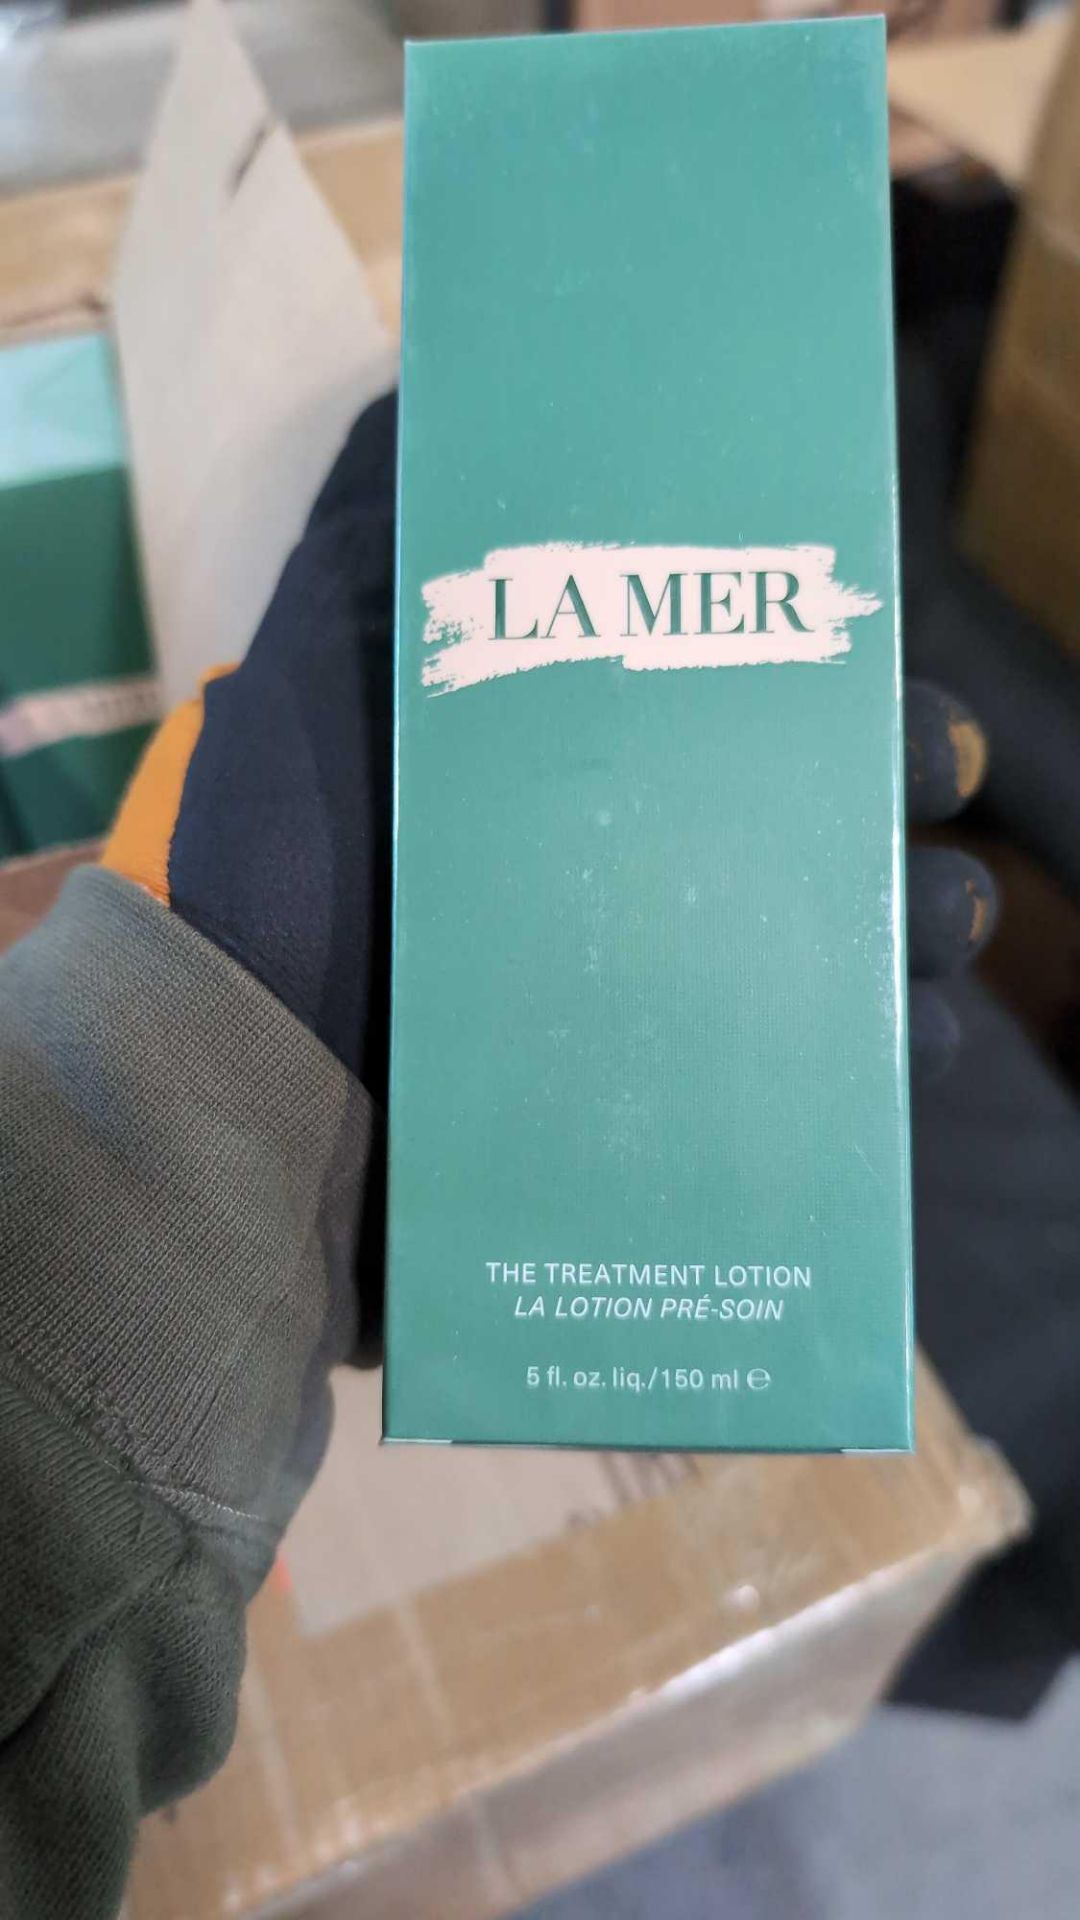 La Mer The Treatment Lotion approx 36 units